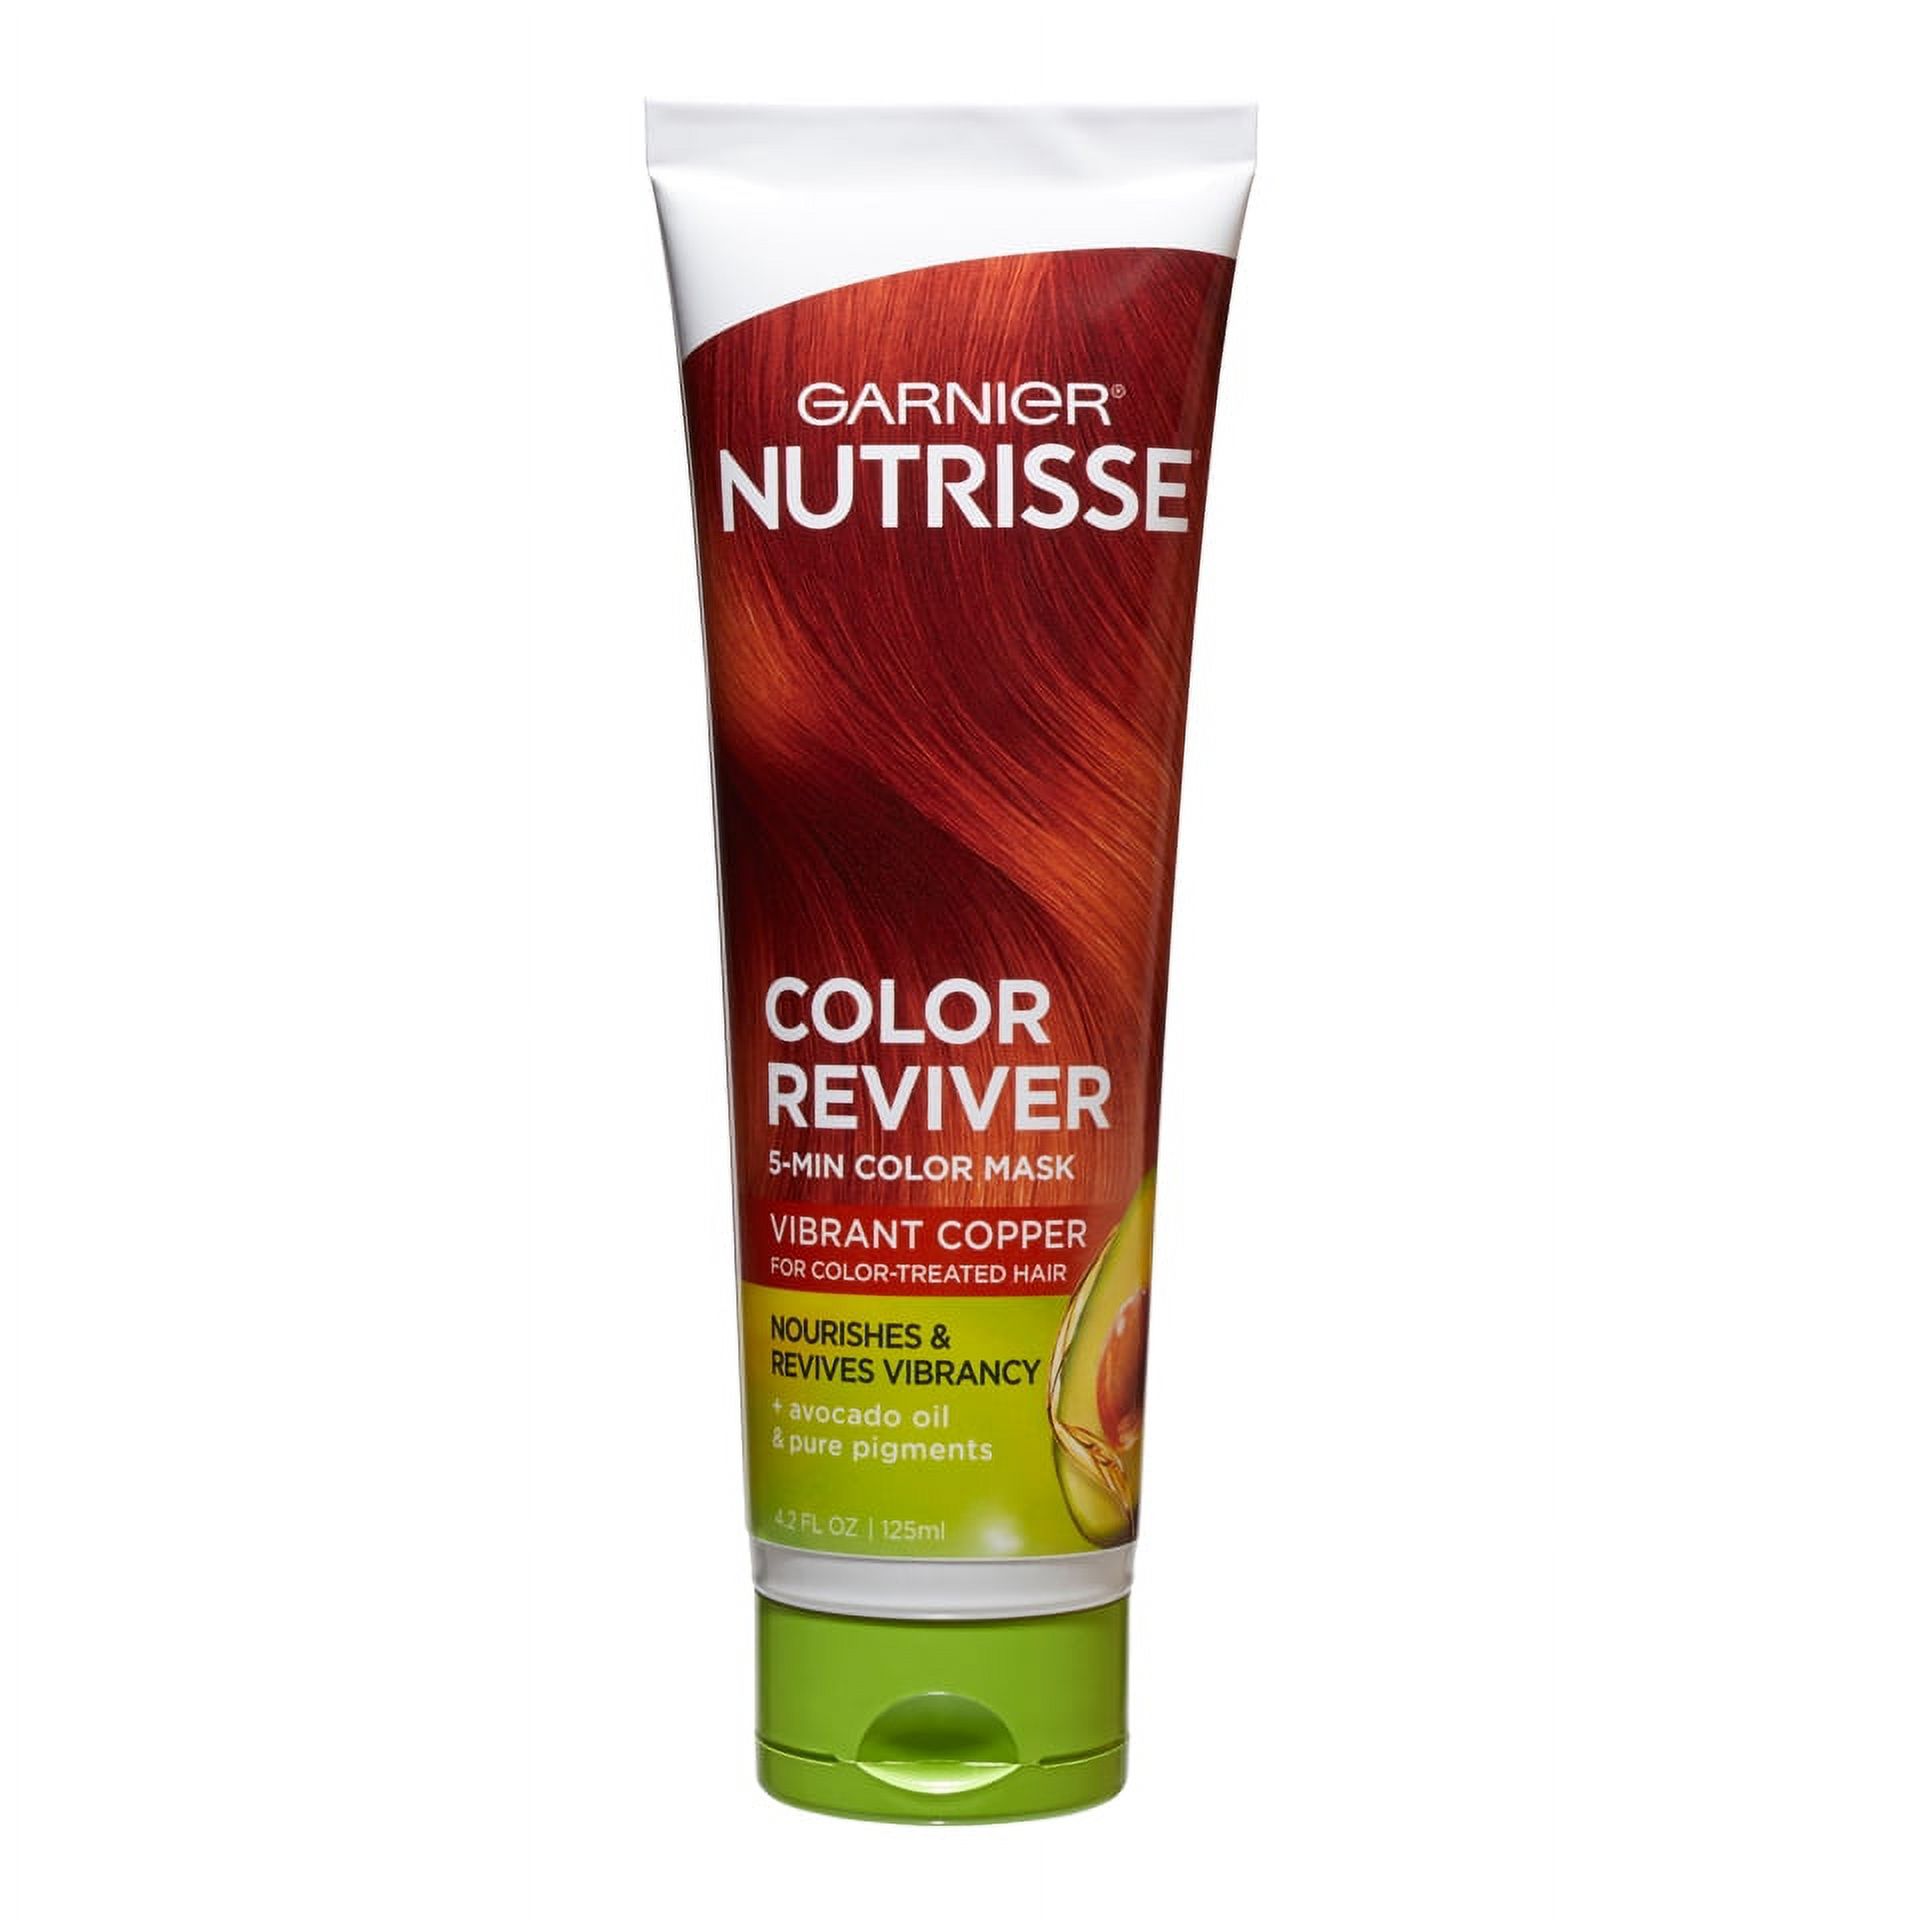 Garnier Nutrisse Nourishing Hair Color Reviver, Vibrant Copper, 4.2 fl oz - image 1 of 7